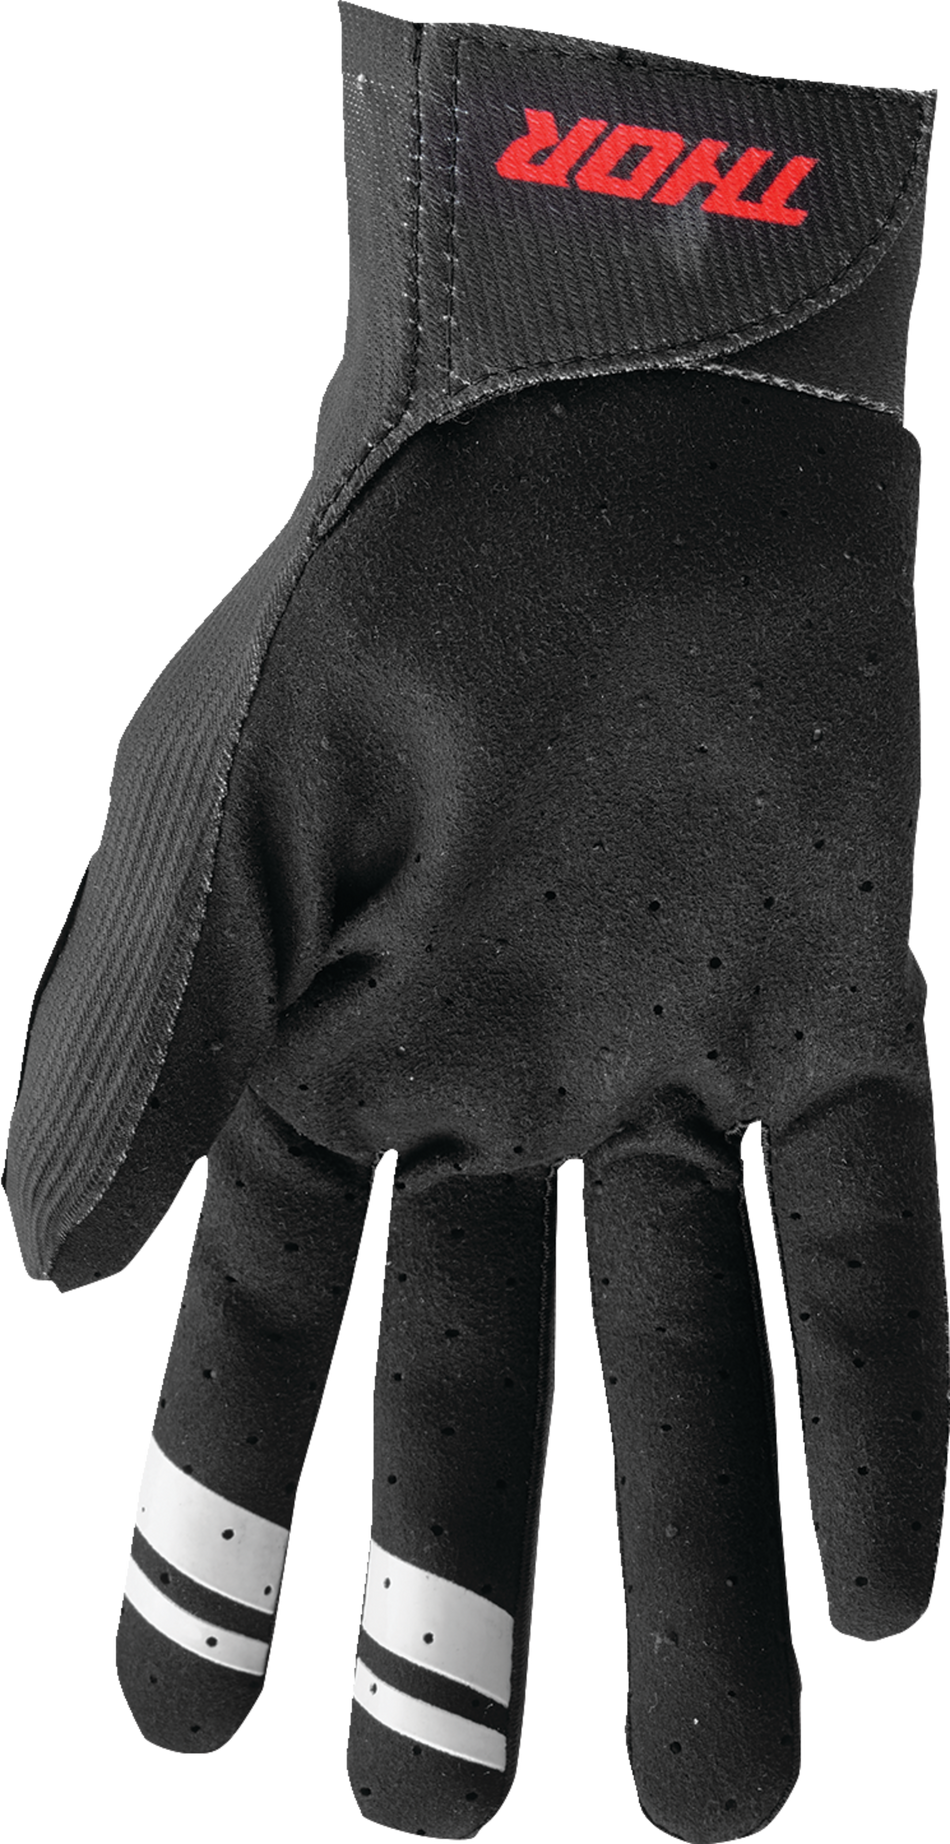 THOR Intense Assist Decoy Gloves - Black/Camo - Medium 3360-0219